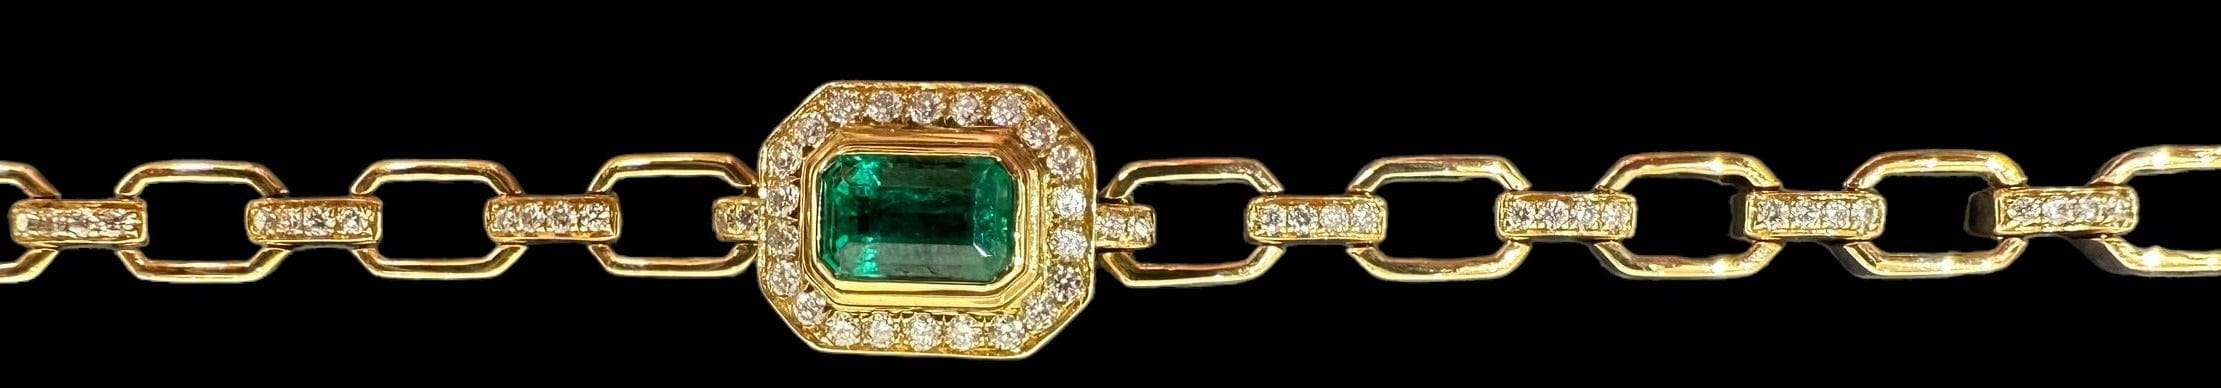 Luxury Promise Emerald & 18K Yellow Gold Bracelet with Diamonds